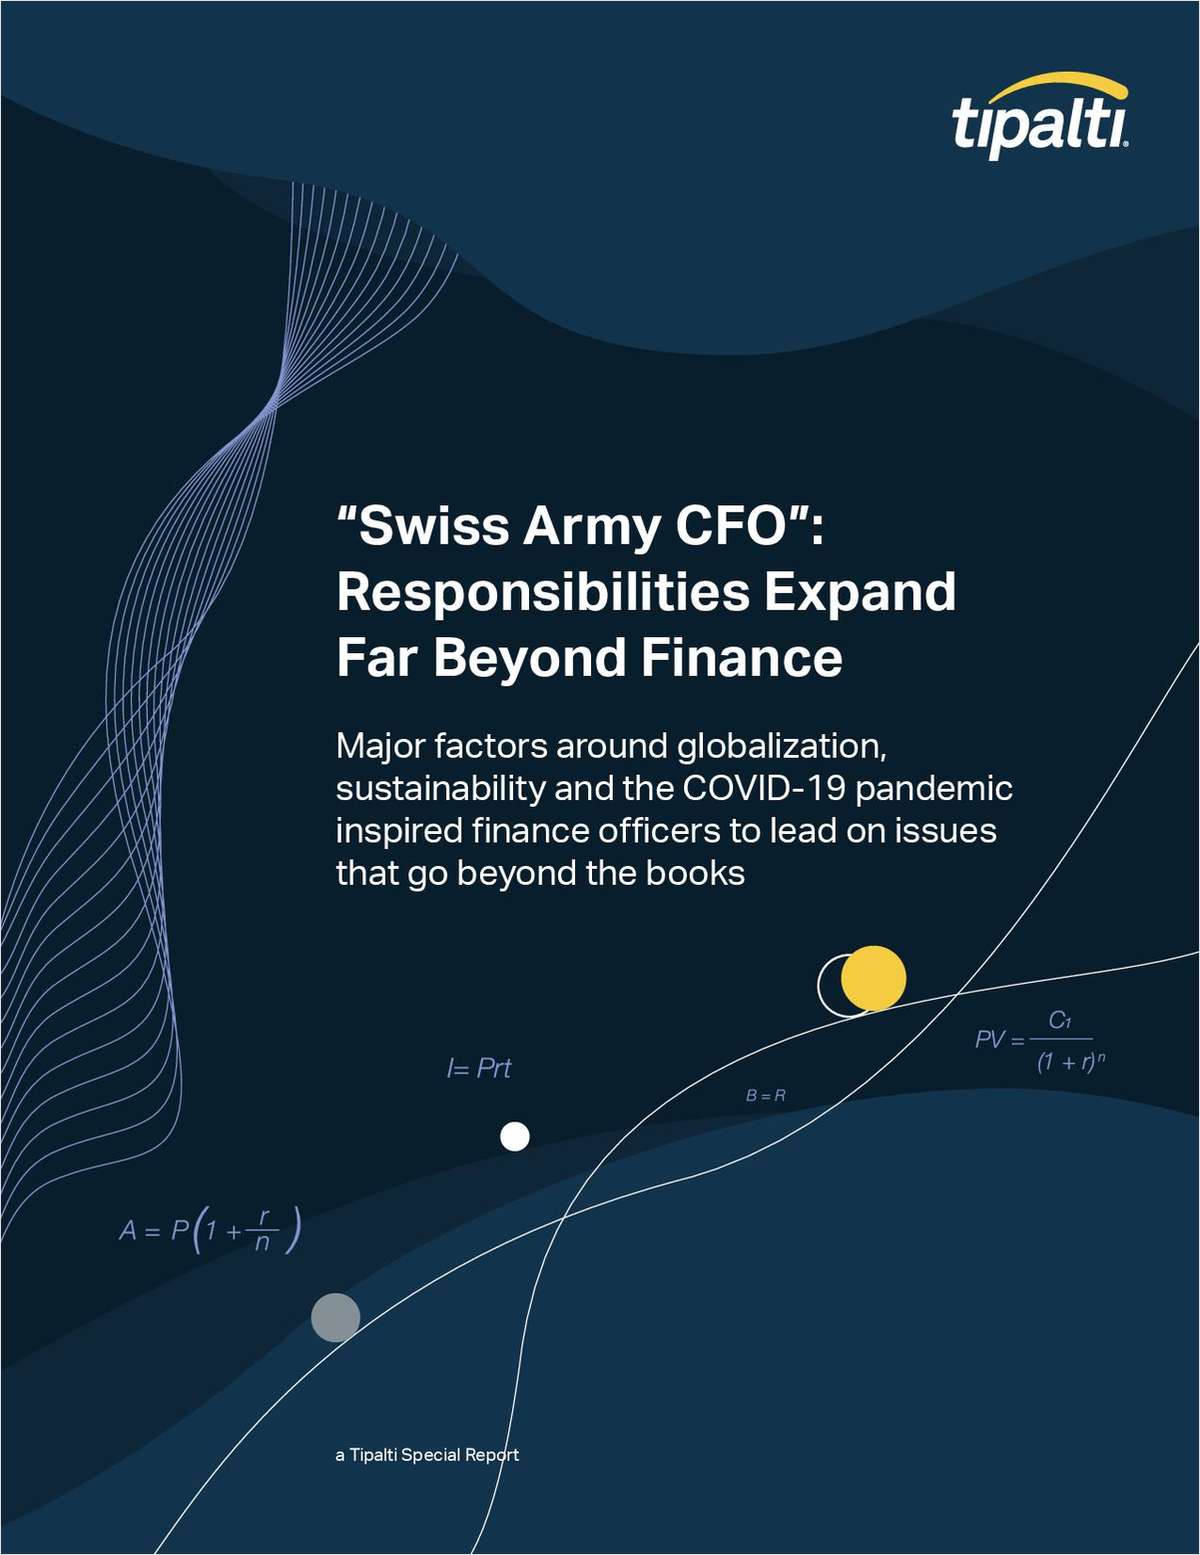 Swiss Army CFO: Responsibilities Expand Far Beyond Finance